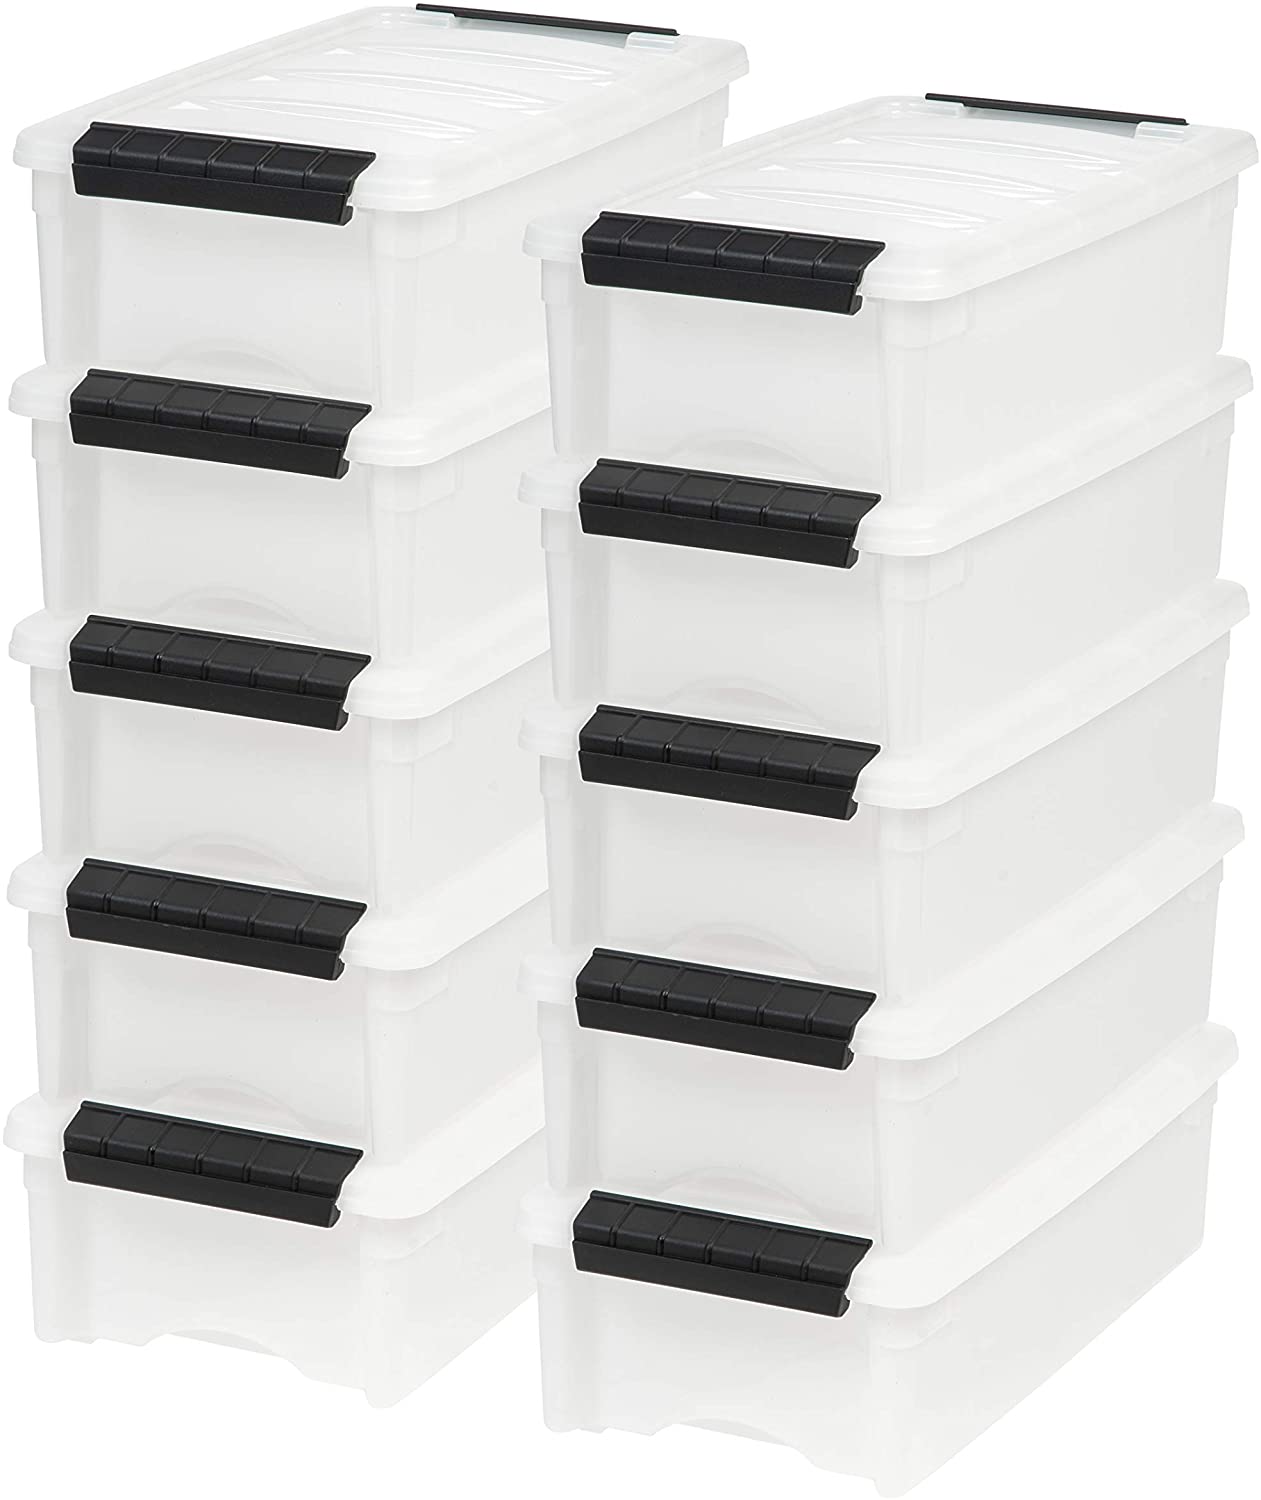 https://www.dontwasteyourmoney.com/wp-content/uploads/2022/04/iris-usa-translucent-stackable-small-plastic-storage-bins-10-piece-small-plastic-storage-bins.jpg